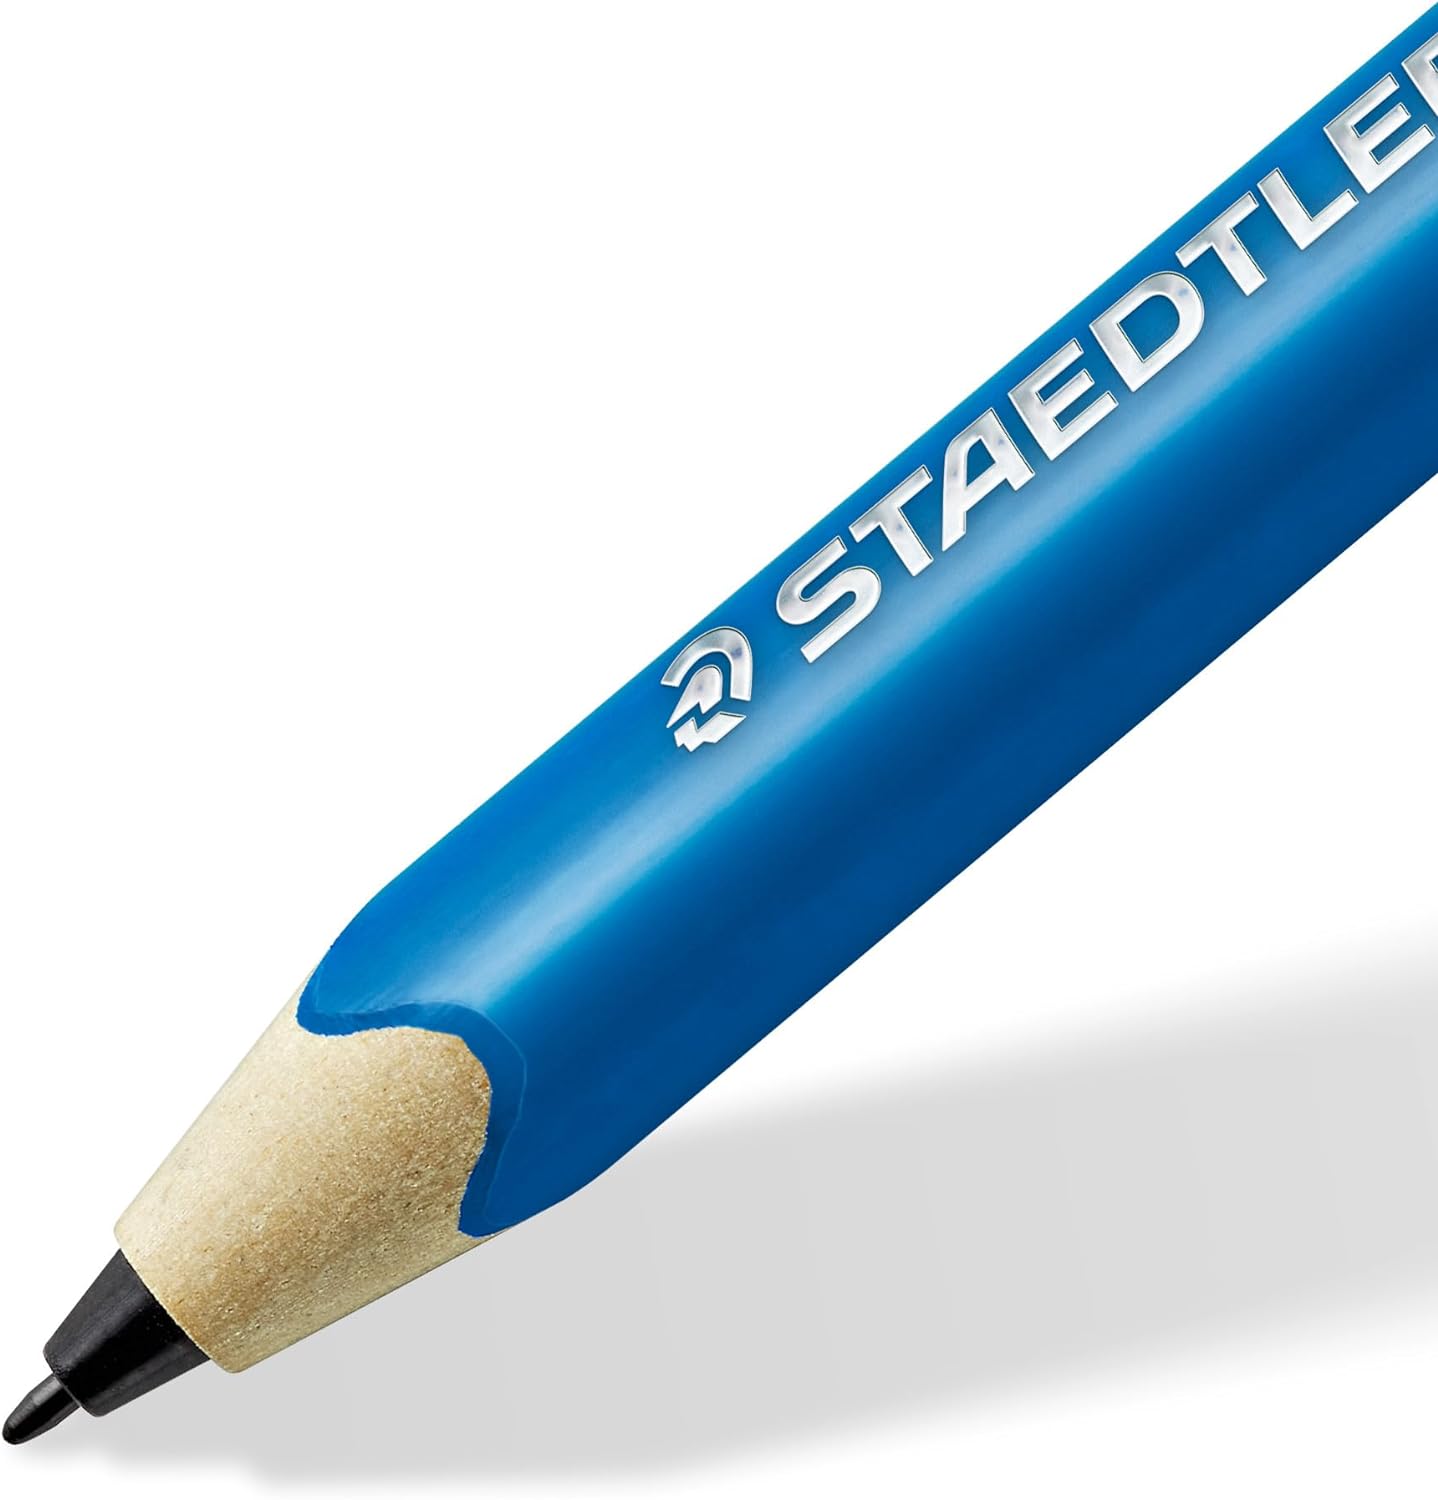 Staedtler Mars Digital Jumbo 180J 22. EMR, capacitive stylus for writing and erasing on EMR touch screens